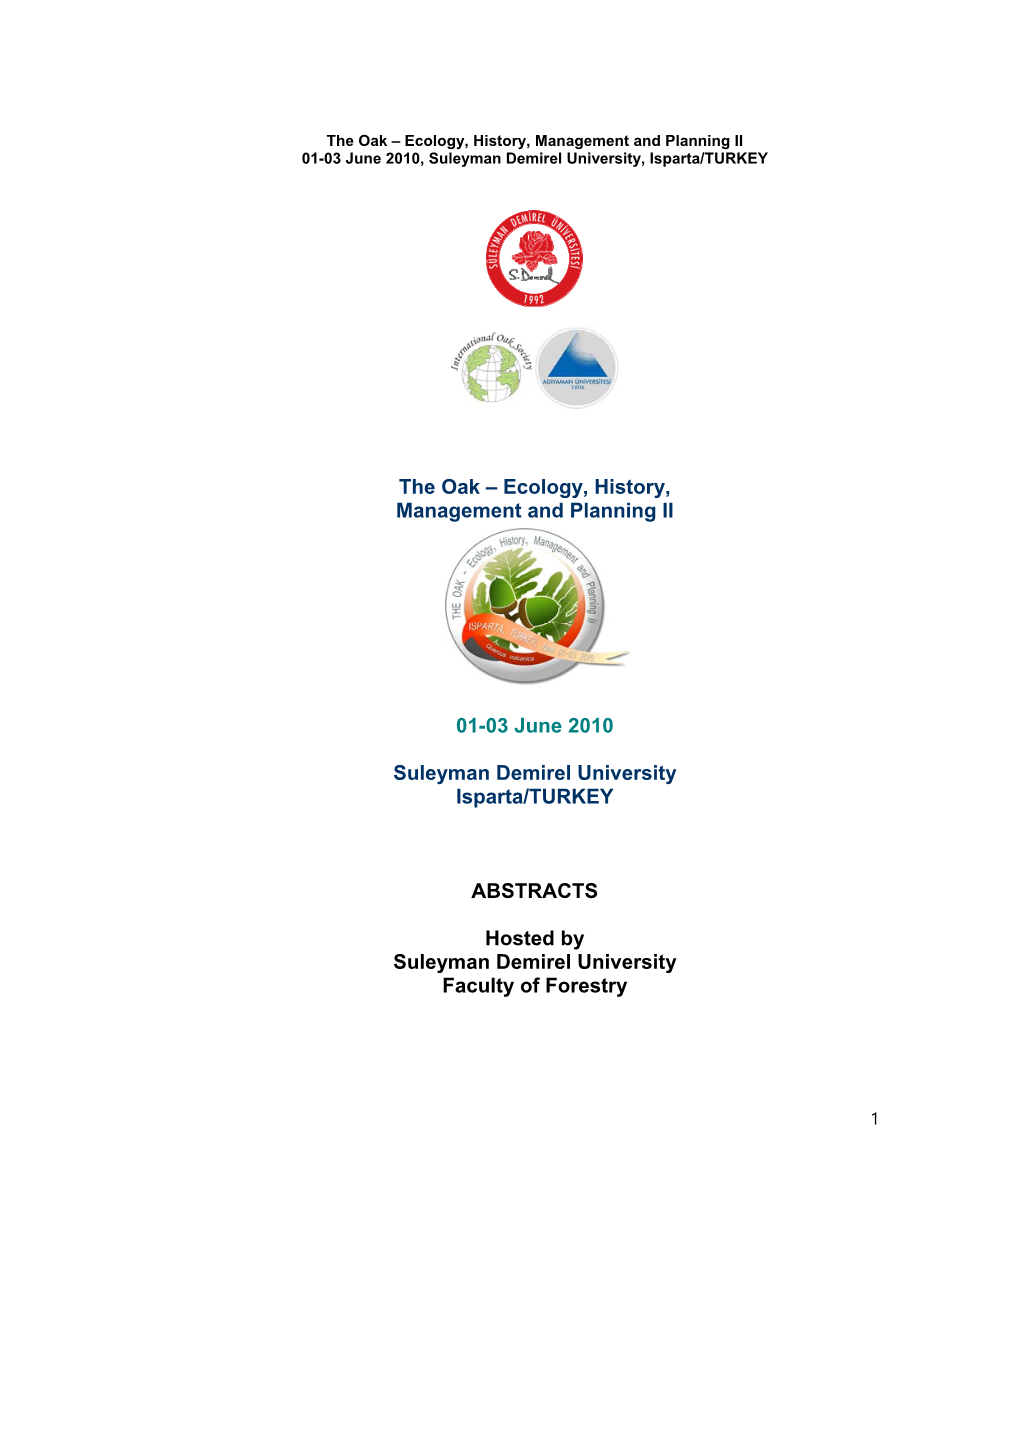 The Oak – Ecology, History, Management and Planning II 01-03 June 2010, Suleyman Demirel University, Isparta/TURKEY